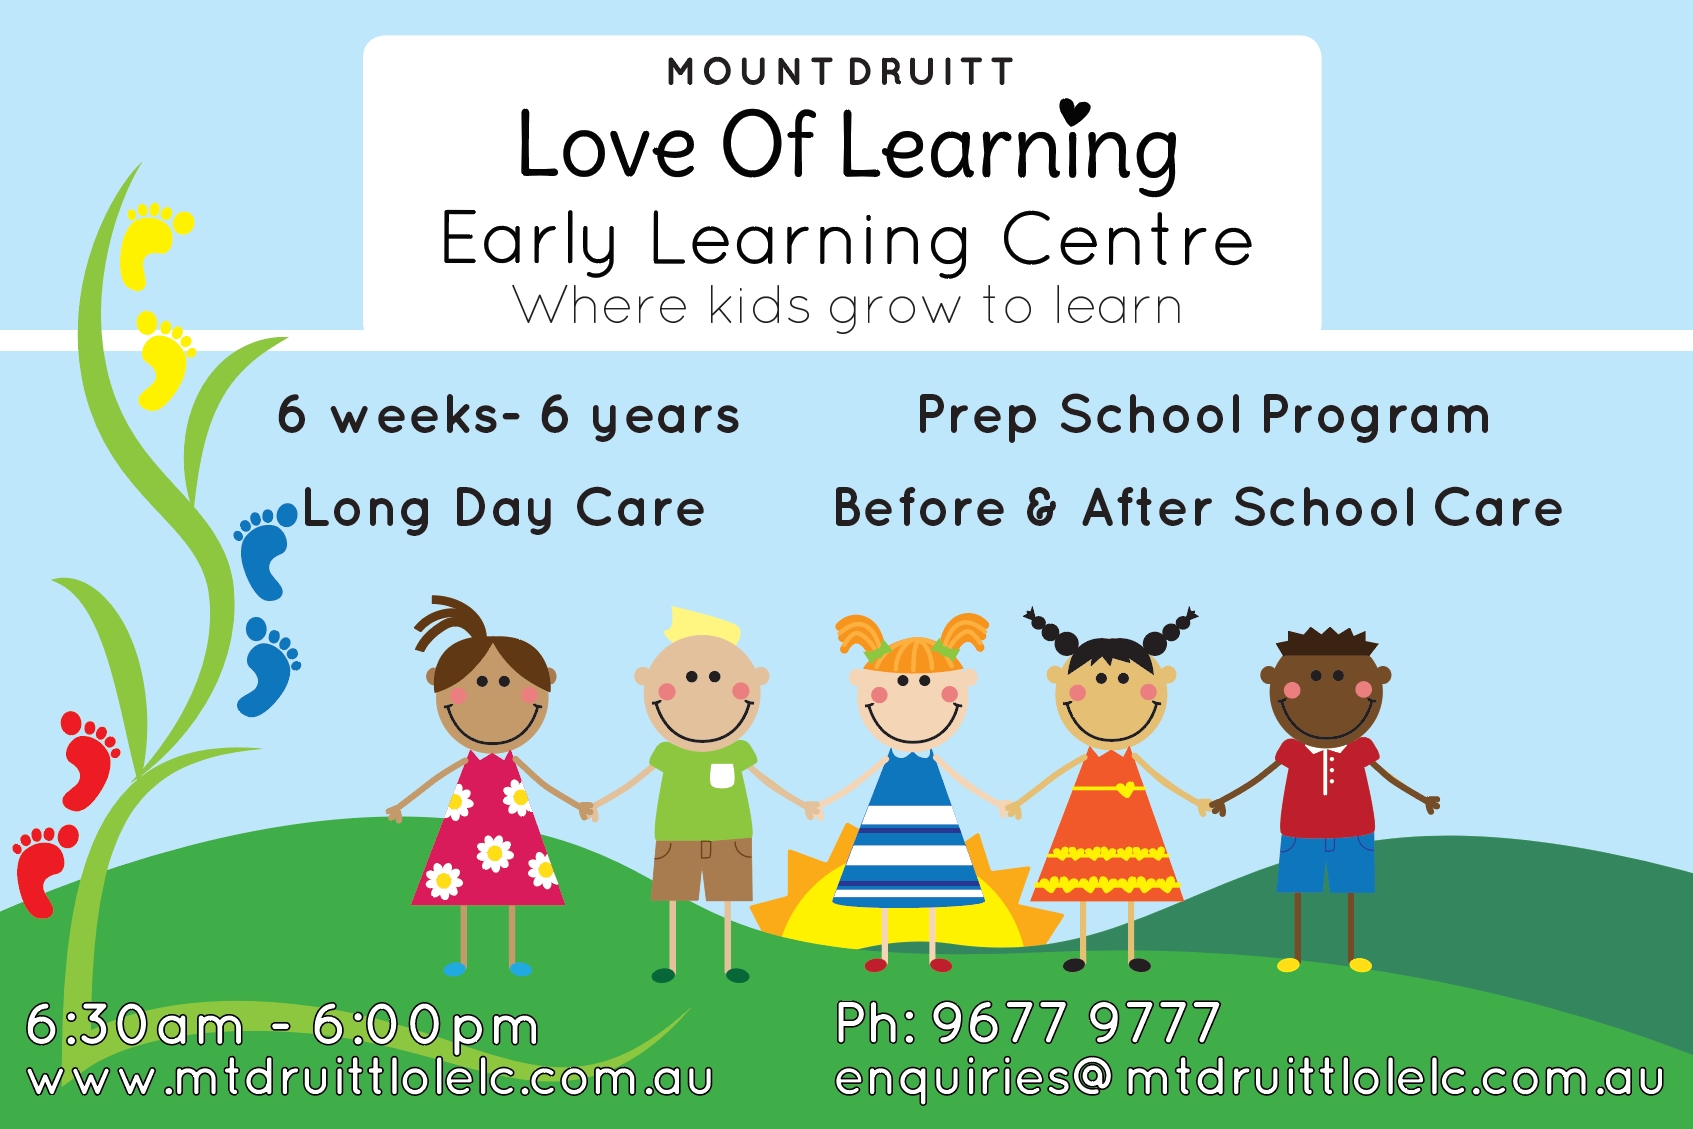 Love Of Learning Early Learning Centre - Mount Druitt